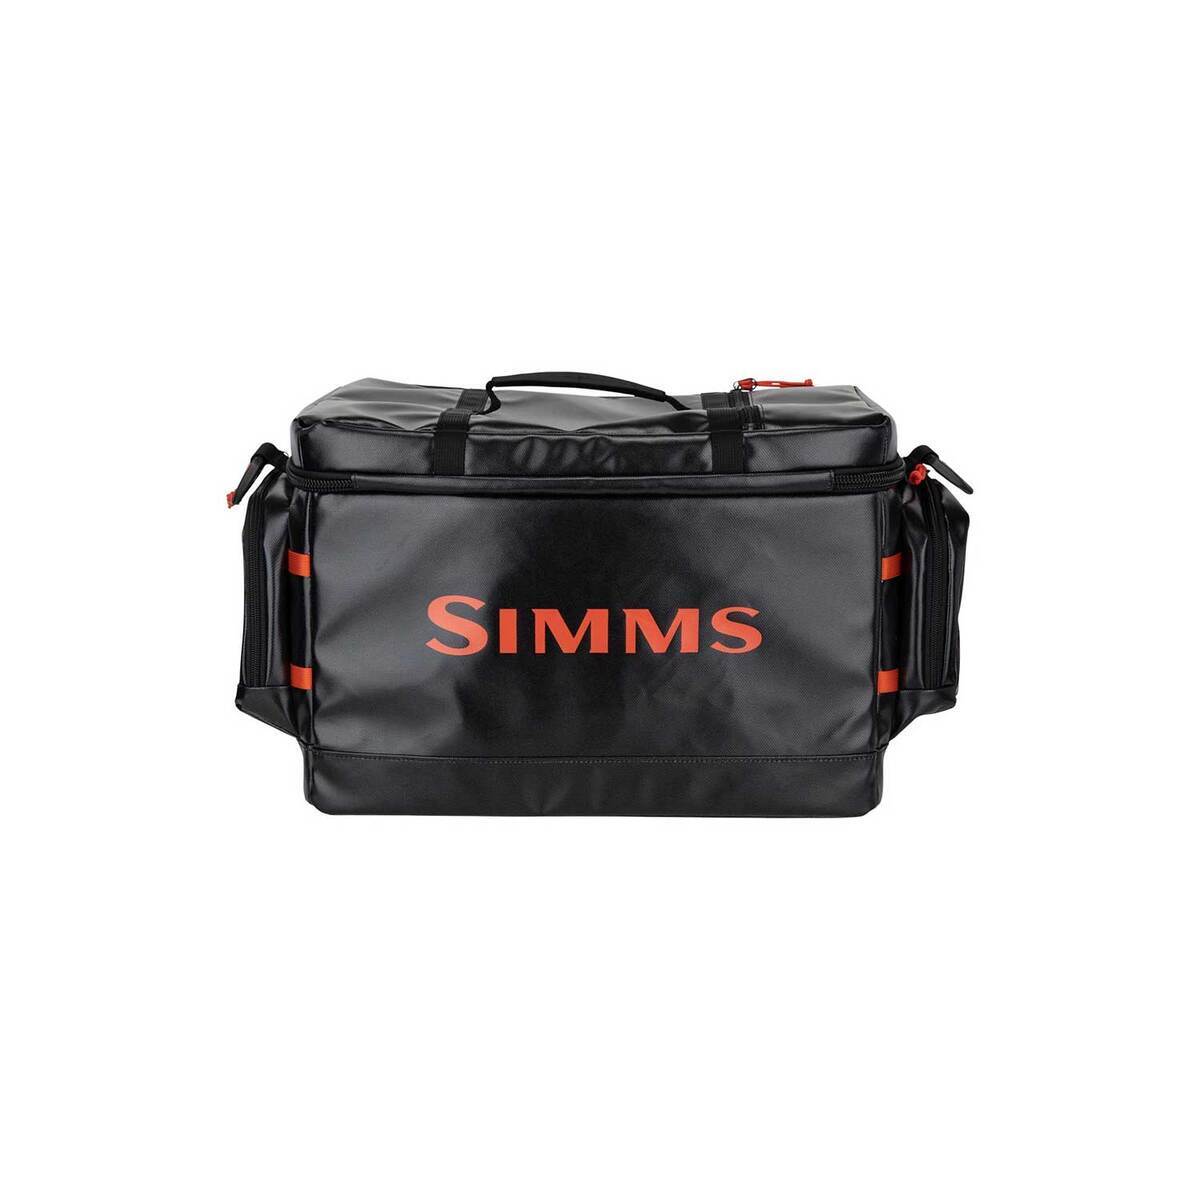 Simms Stash Soft Tackle Bag - Black/Orange